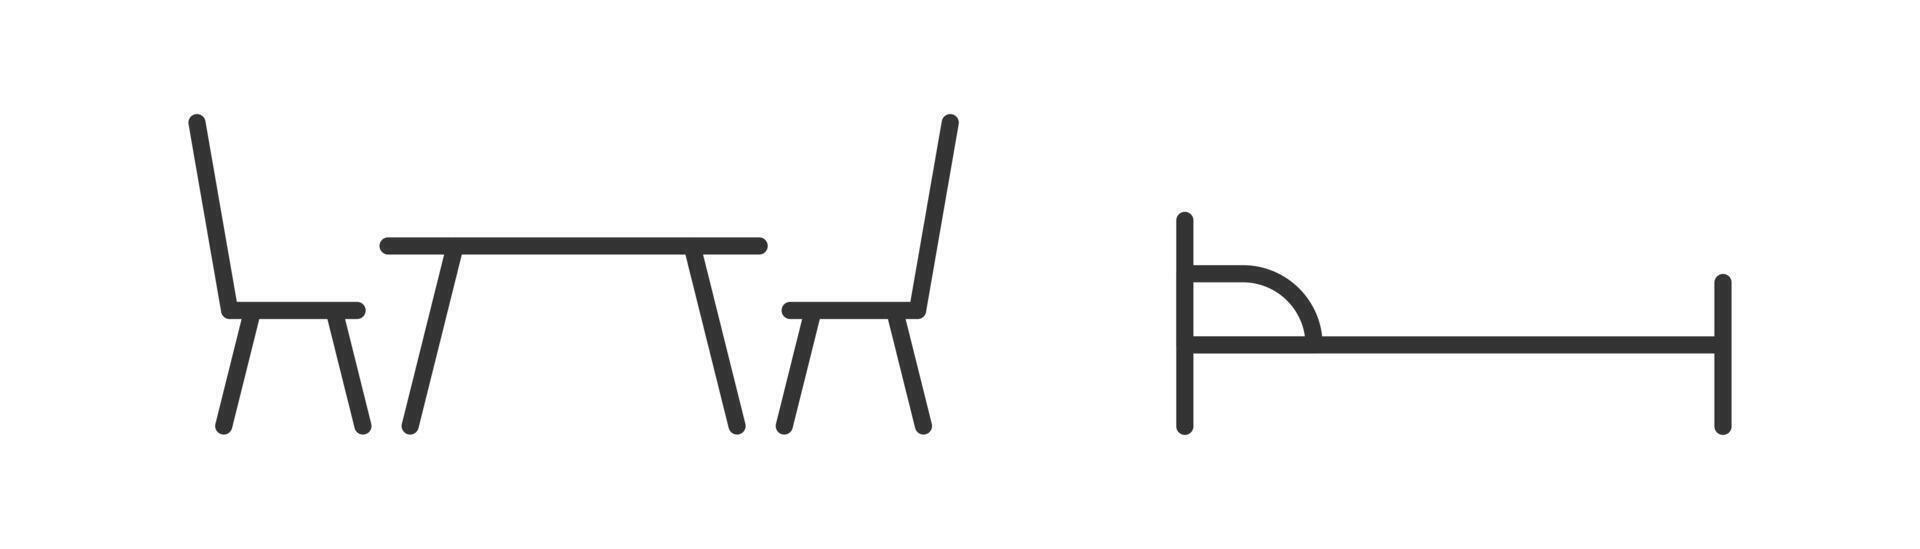 Tabelle mit Stühle und Bett Symbol. linear Vektor Illustration.